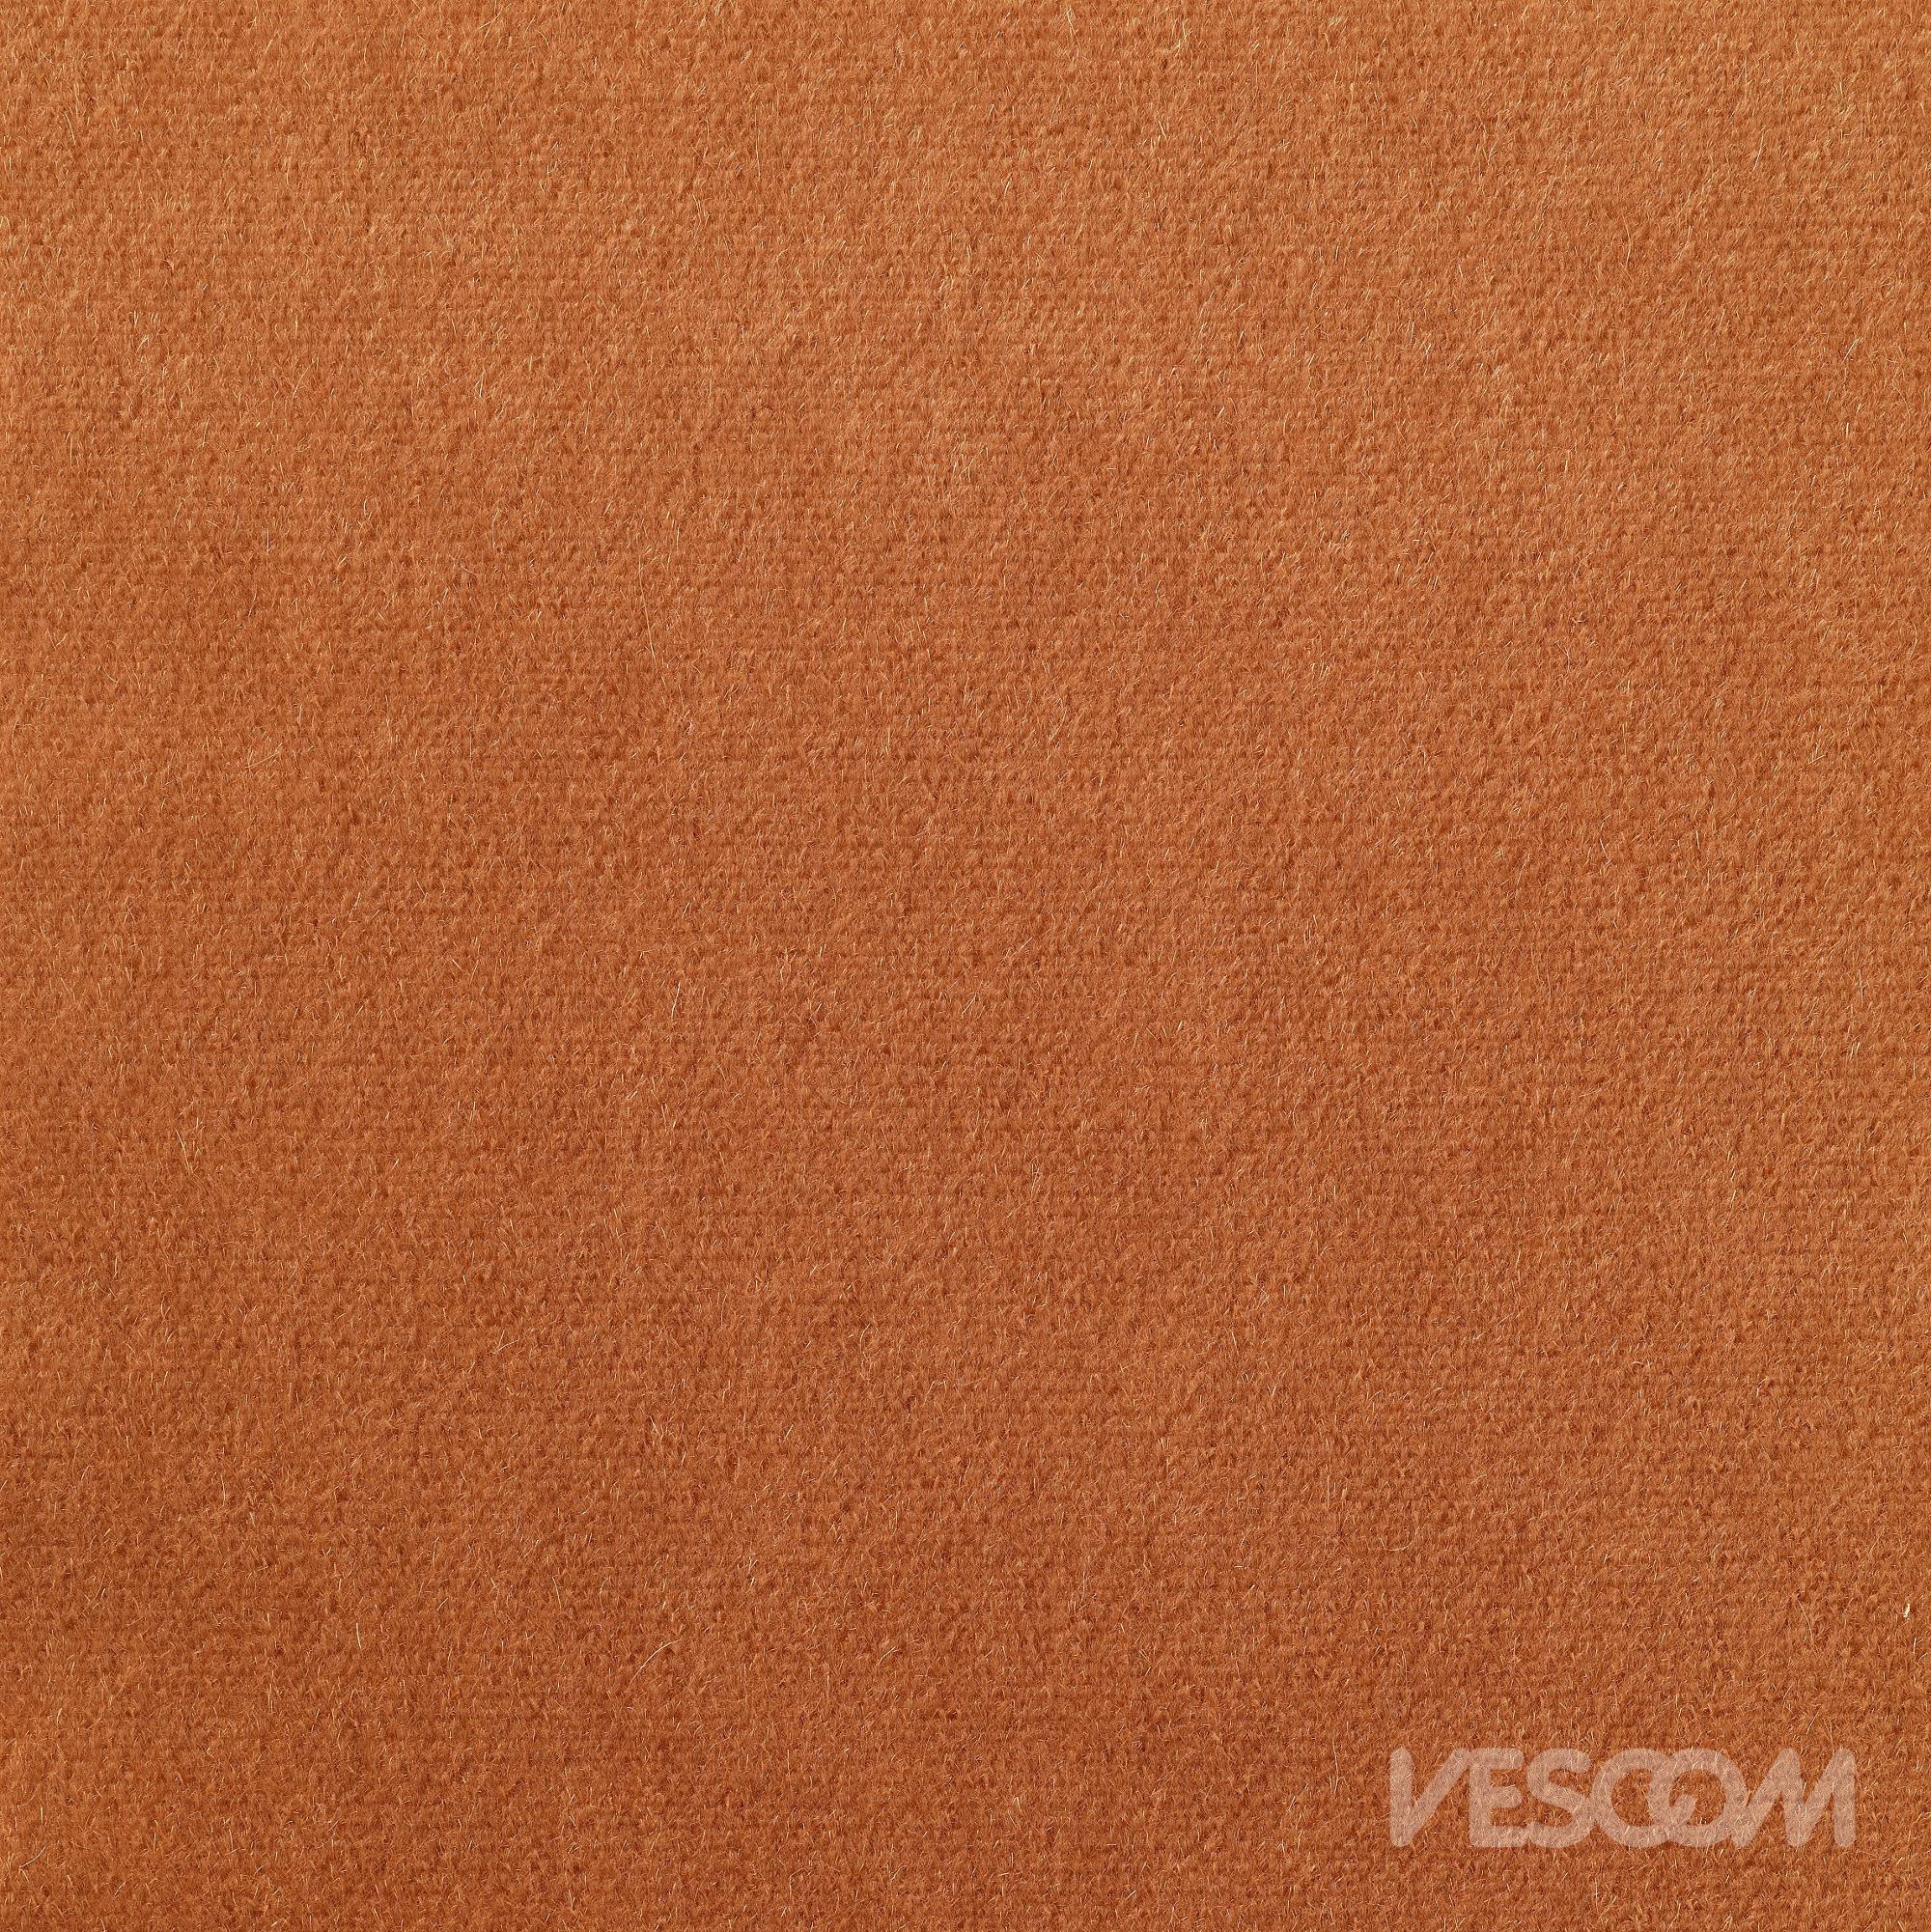 Vescom Ariana Upholstery Fabric 7061.27